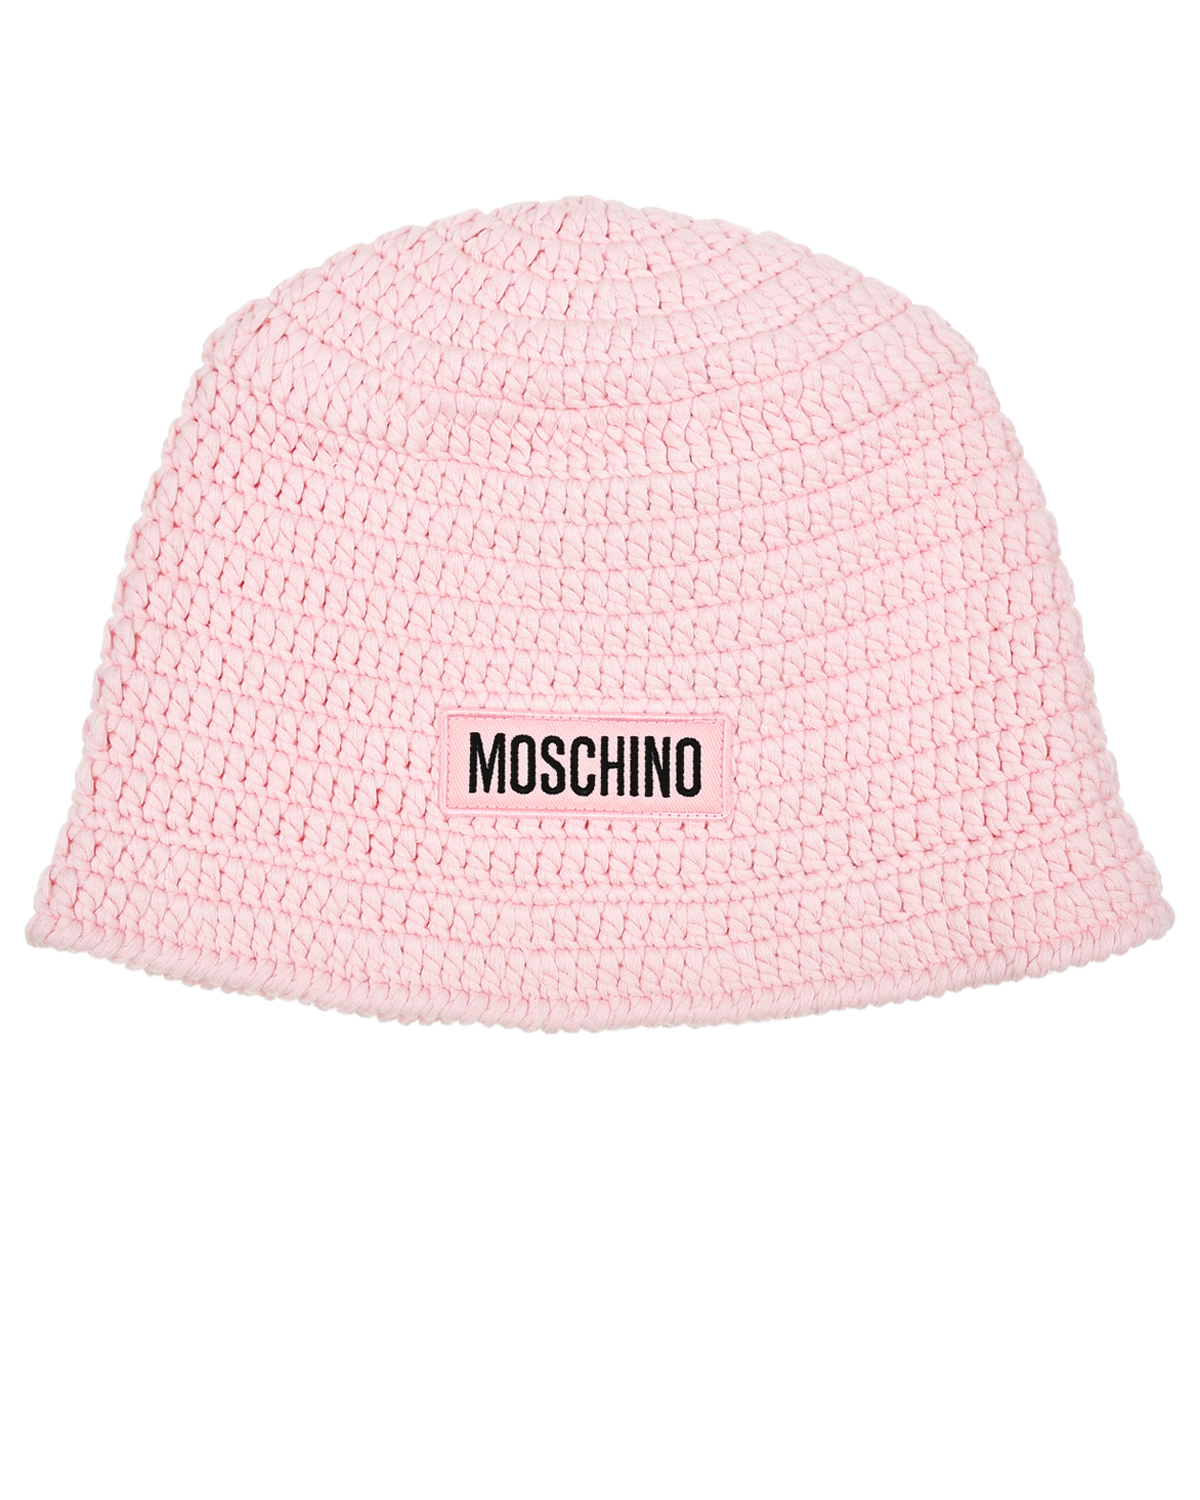 Вязаная шляпа с лого Moschino, размер 58, цвет нет цвета